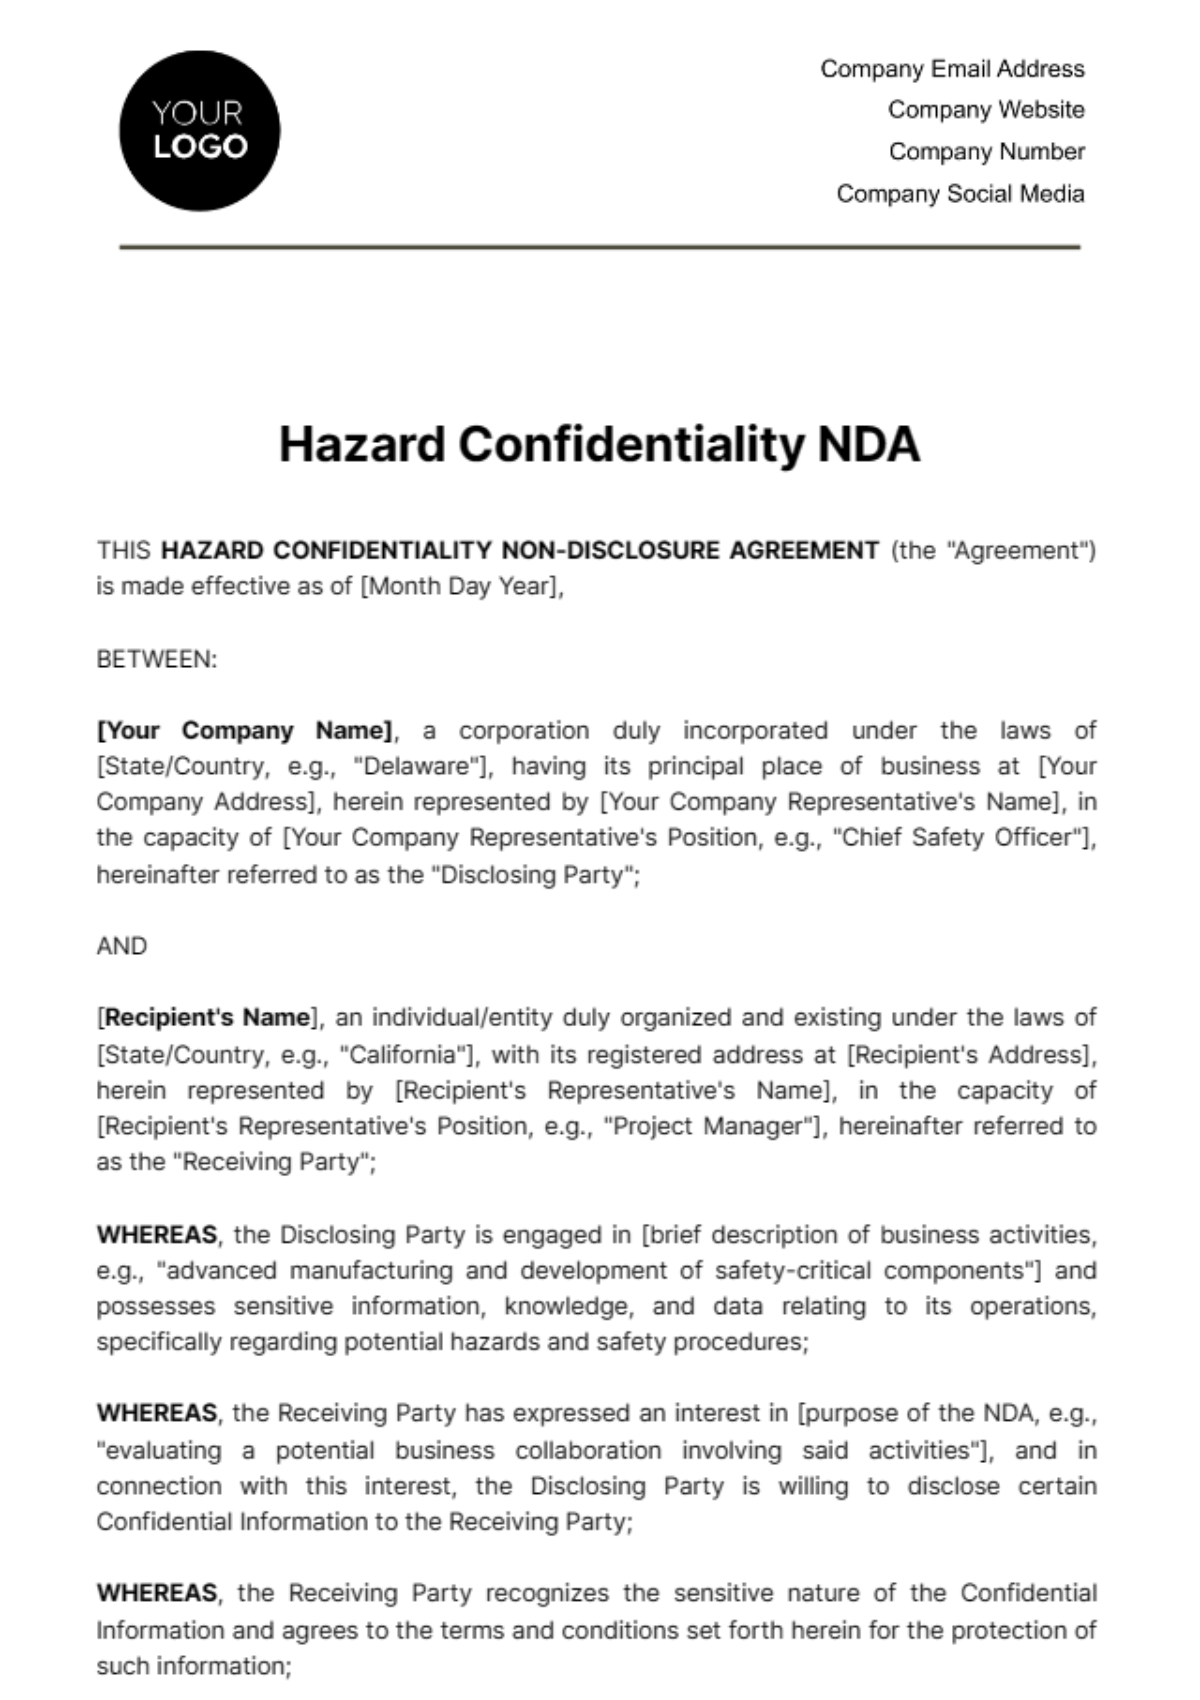 Hazard Confidentiality NDA Template